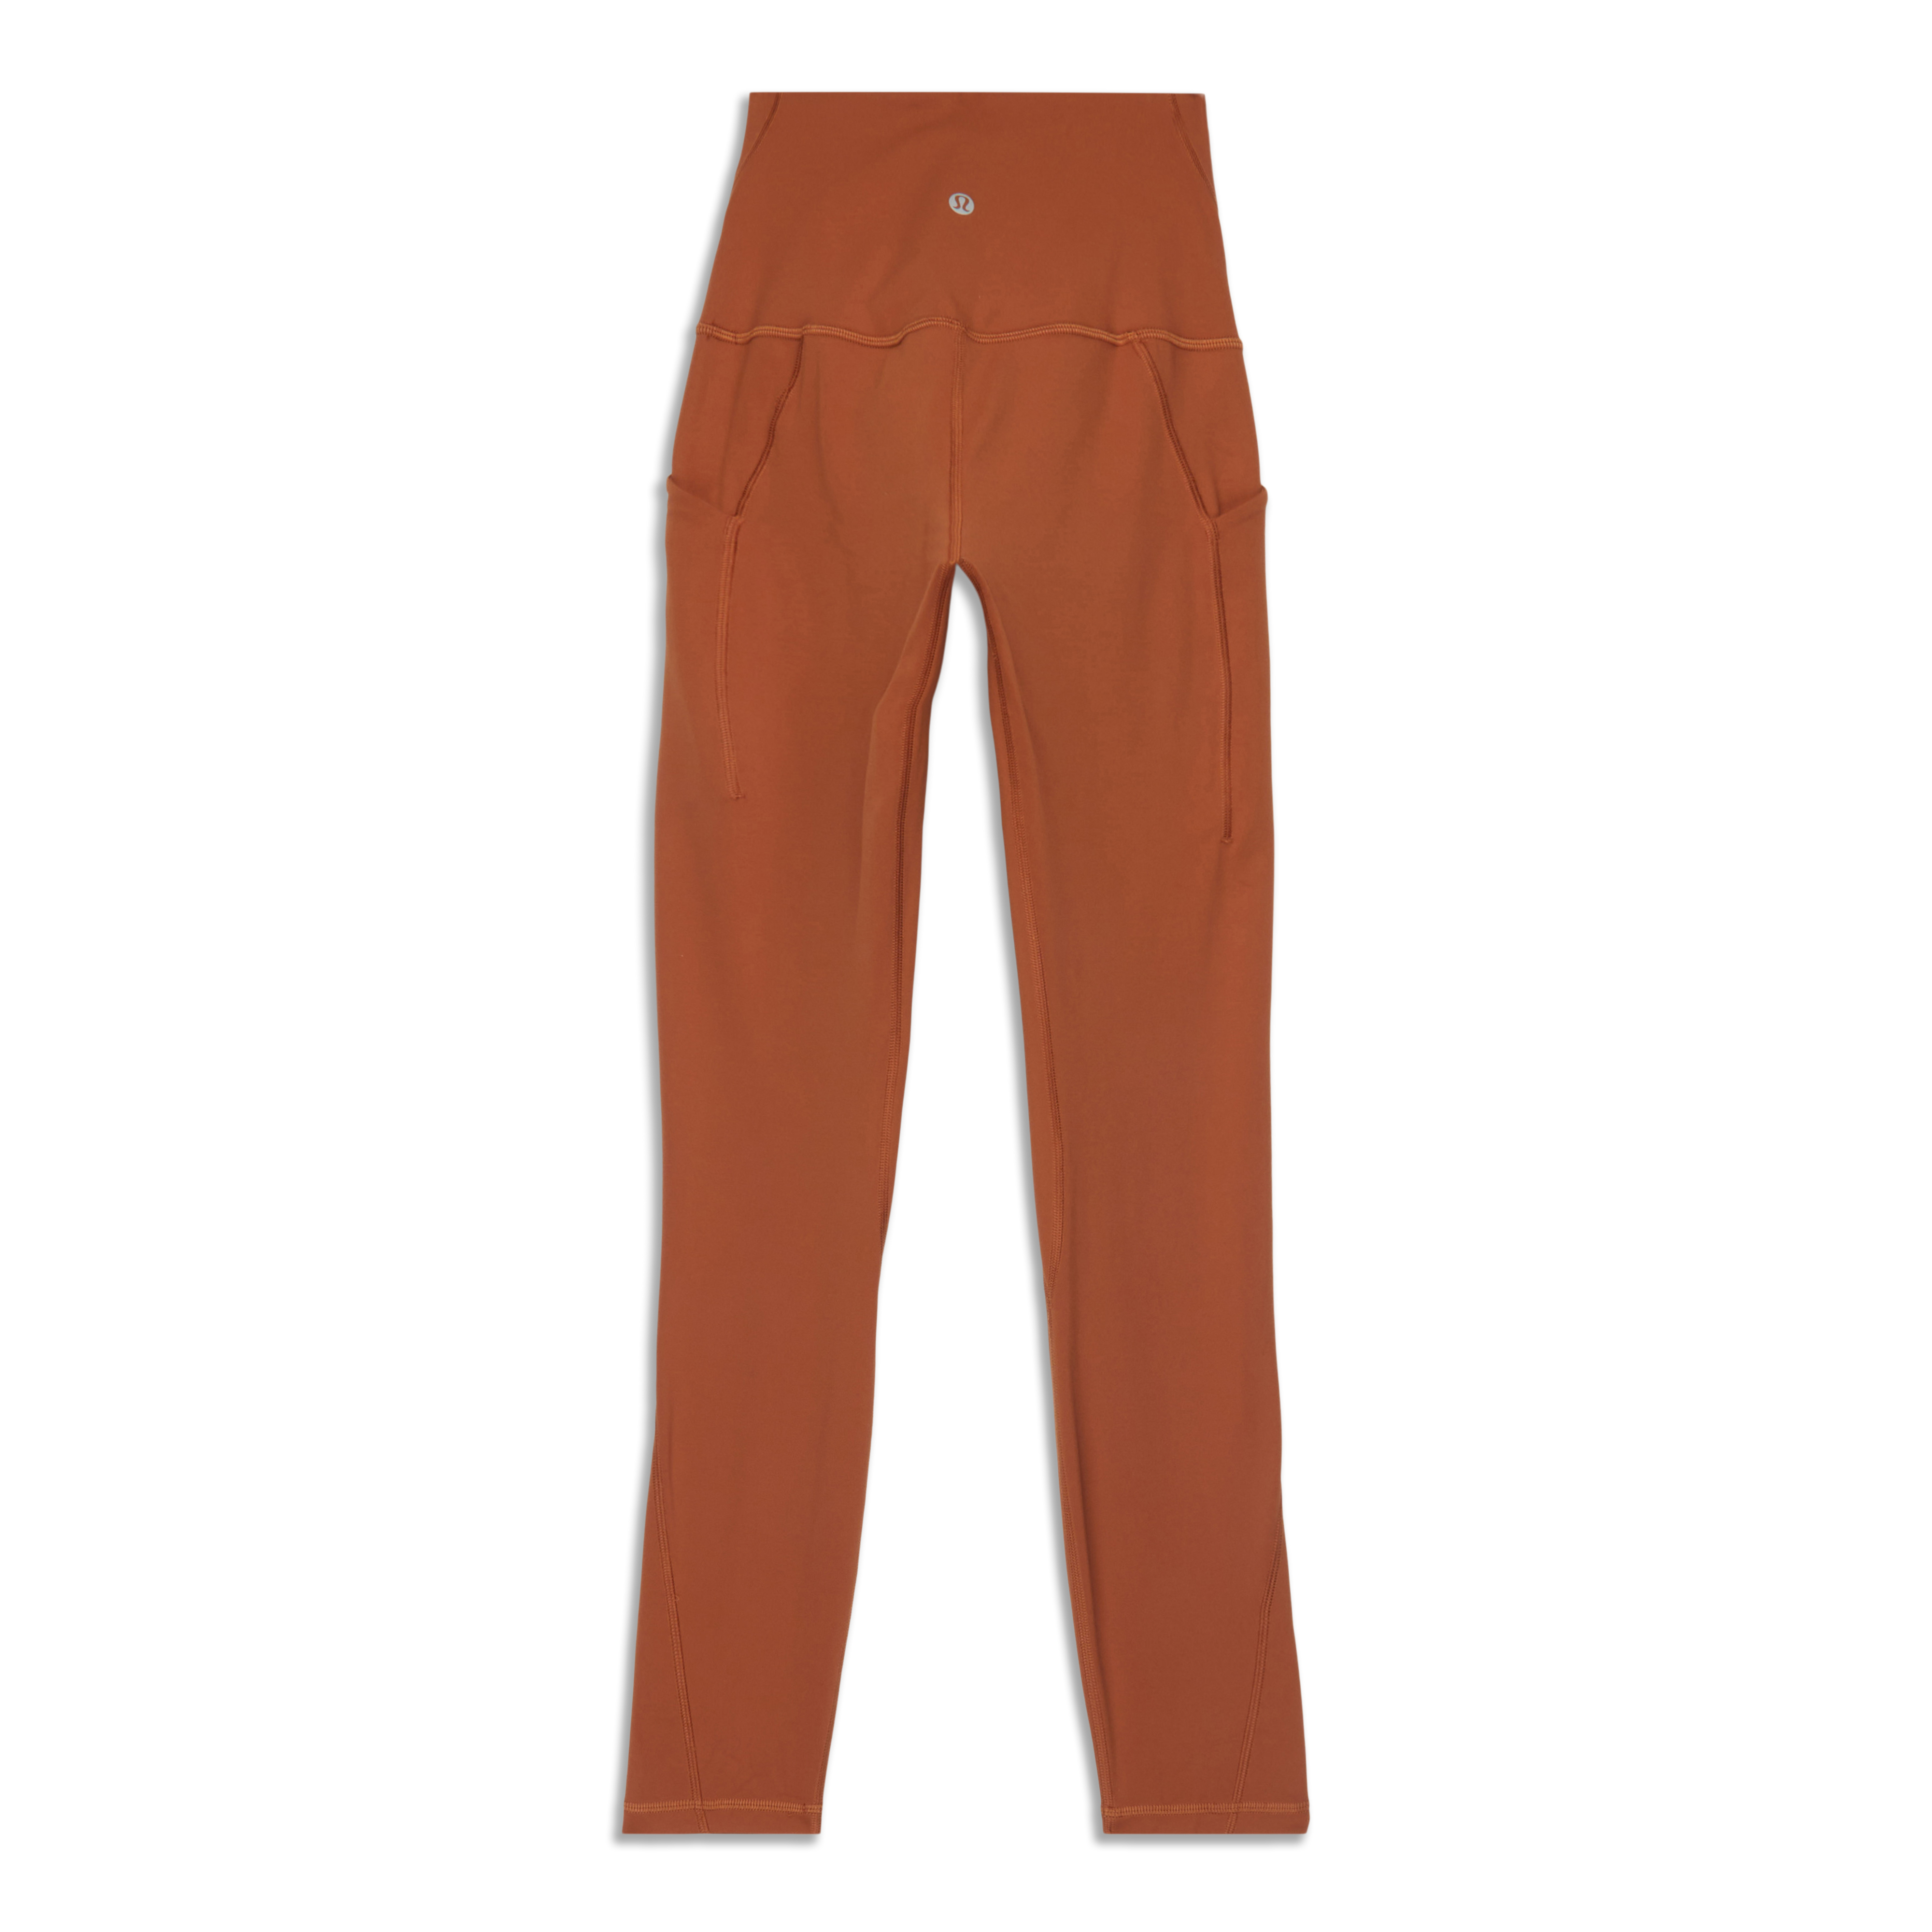 Track lululemon Align™ High-Rise Pant with Pockets 25 - Terra Orange